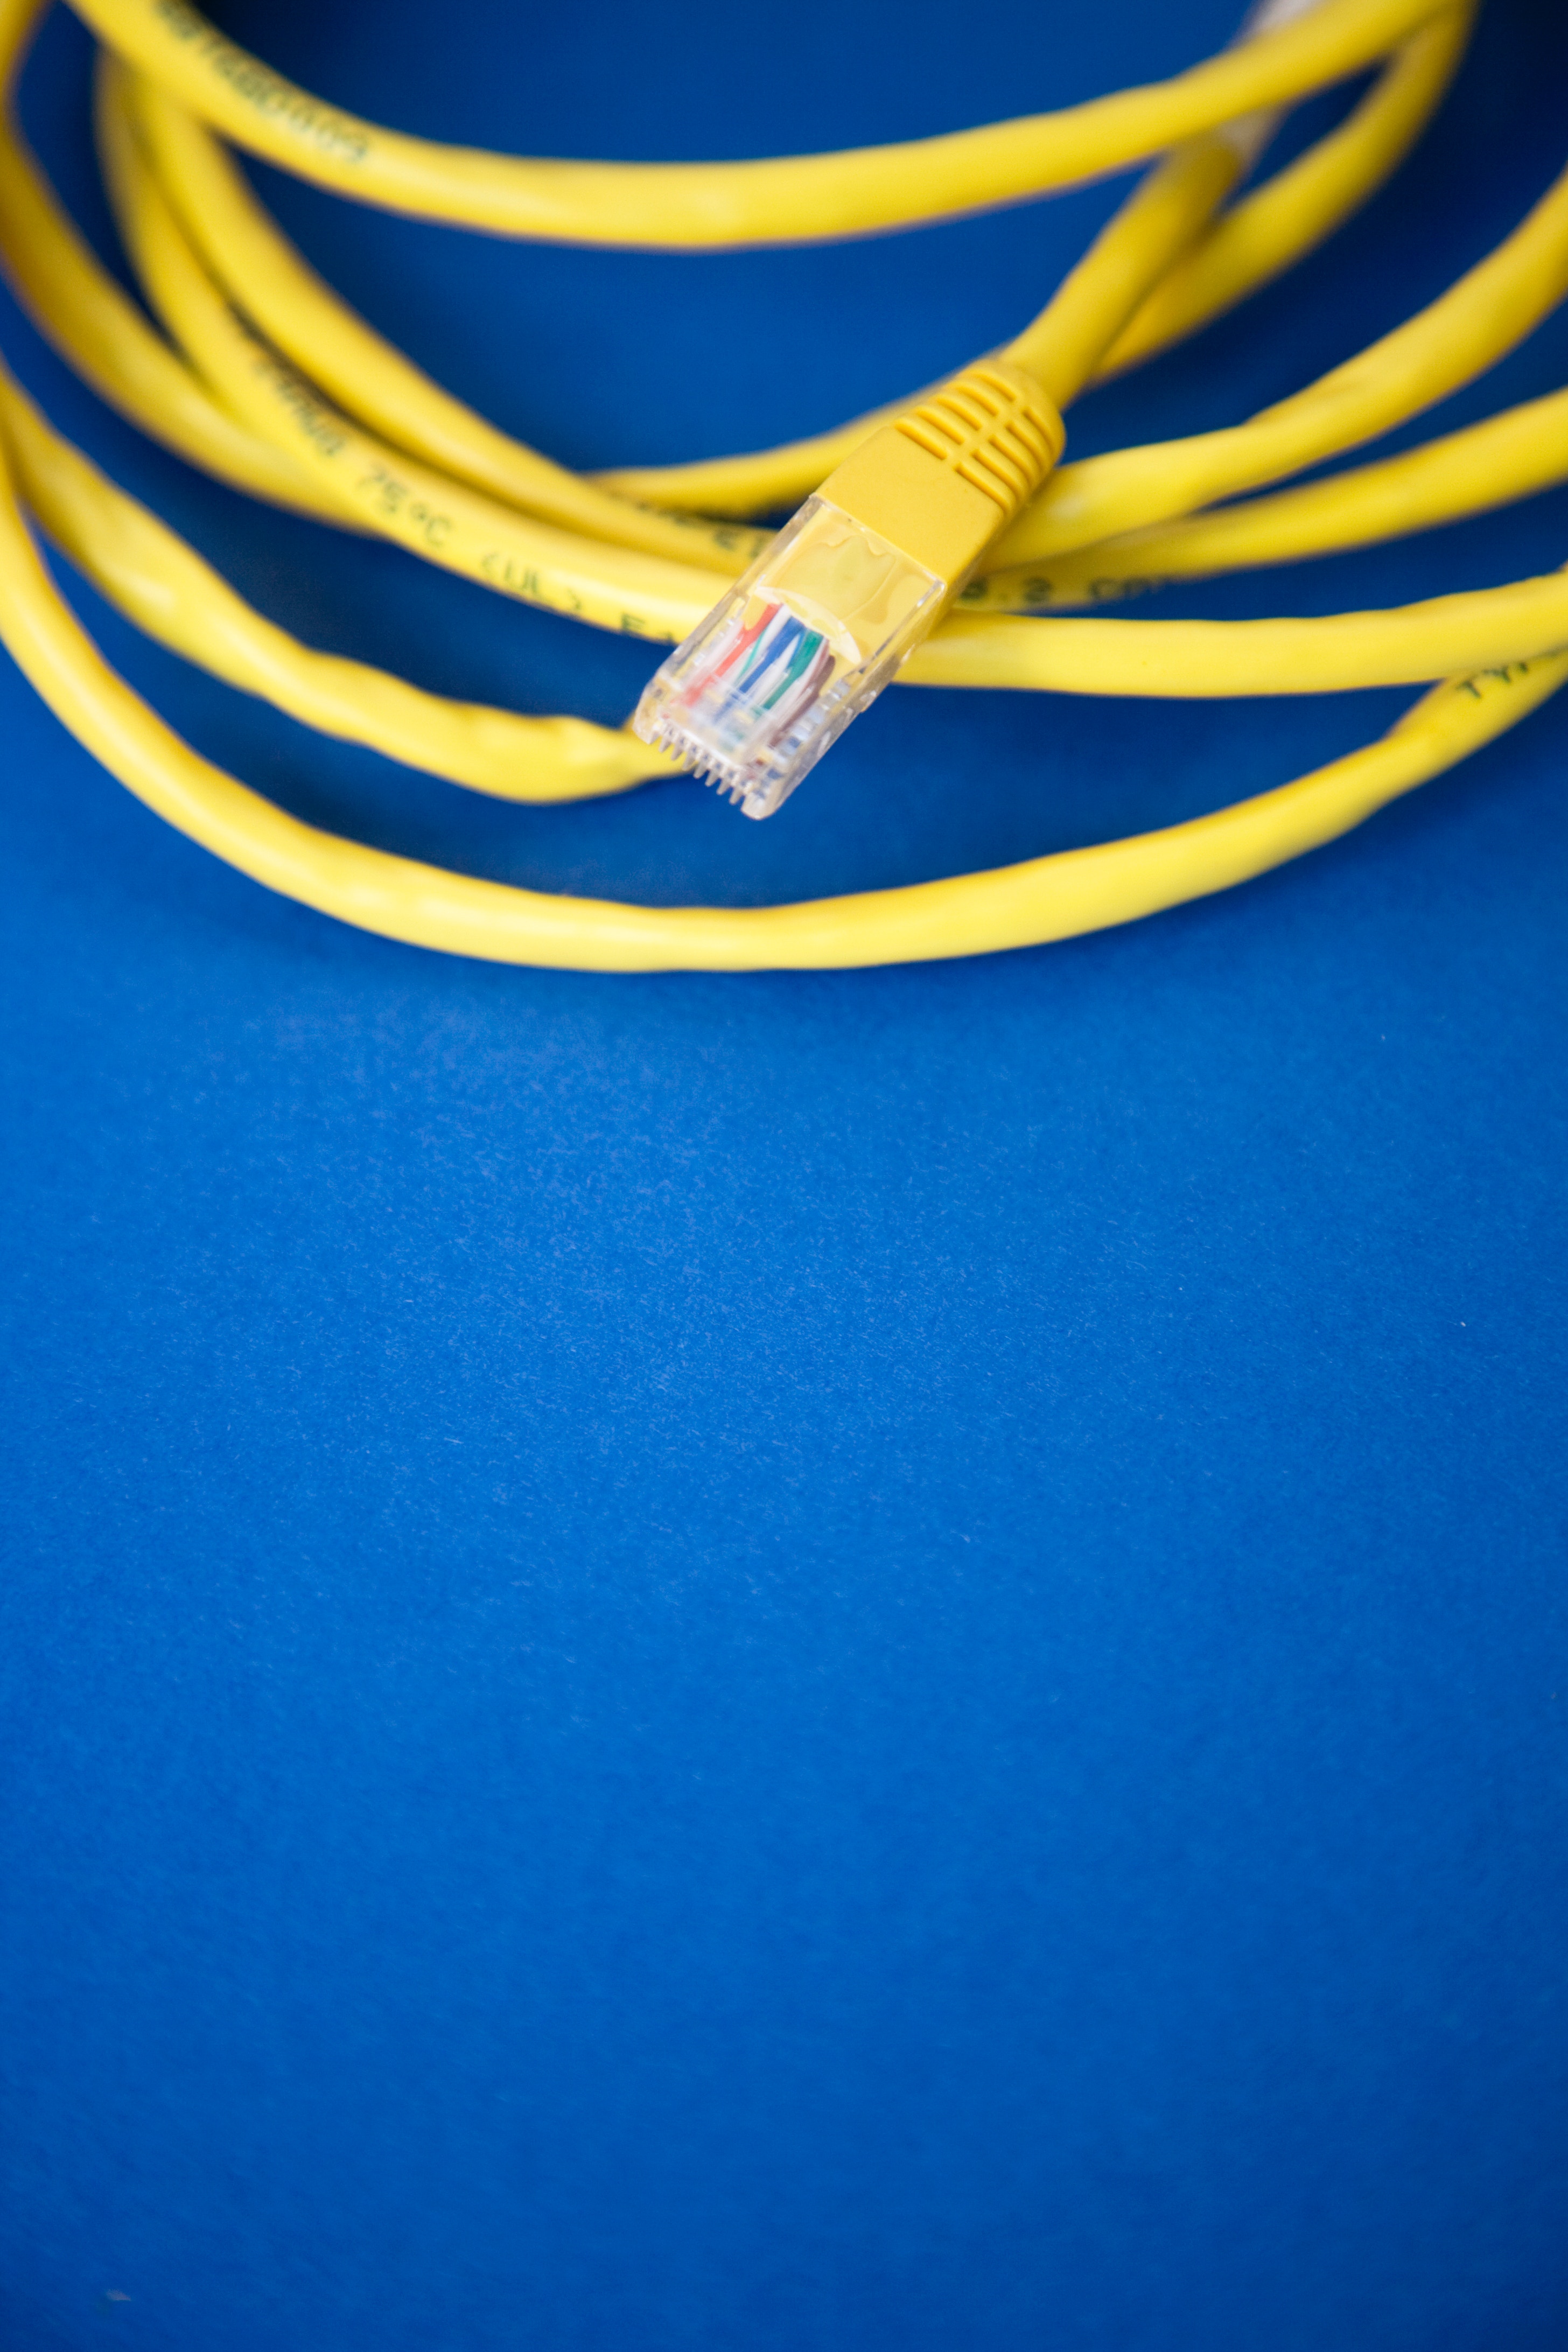 Image of yellow network cable on blue background. Photo by Markus Spiske on Unsplash